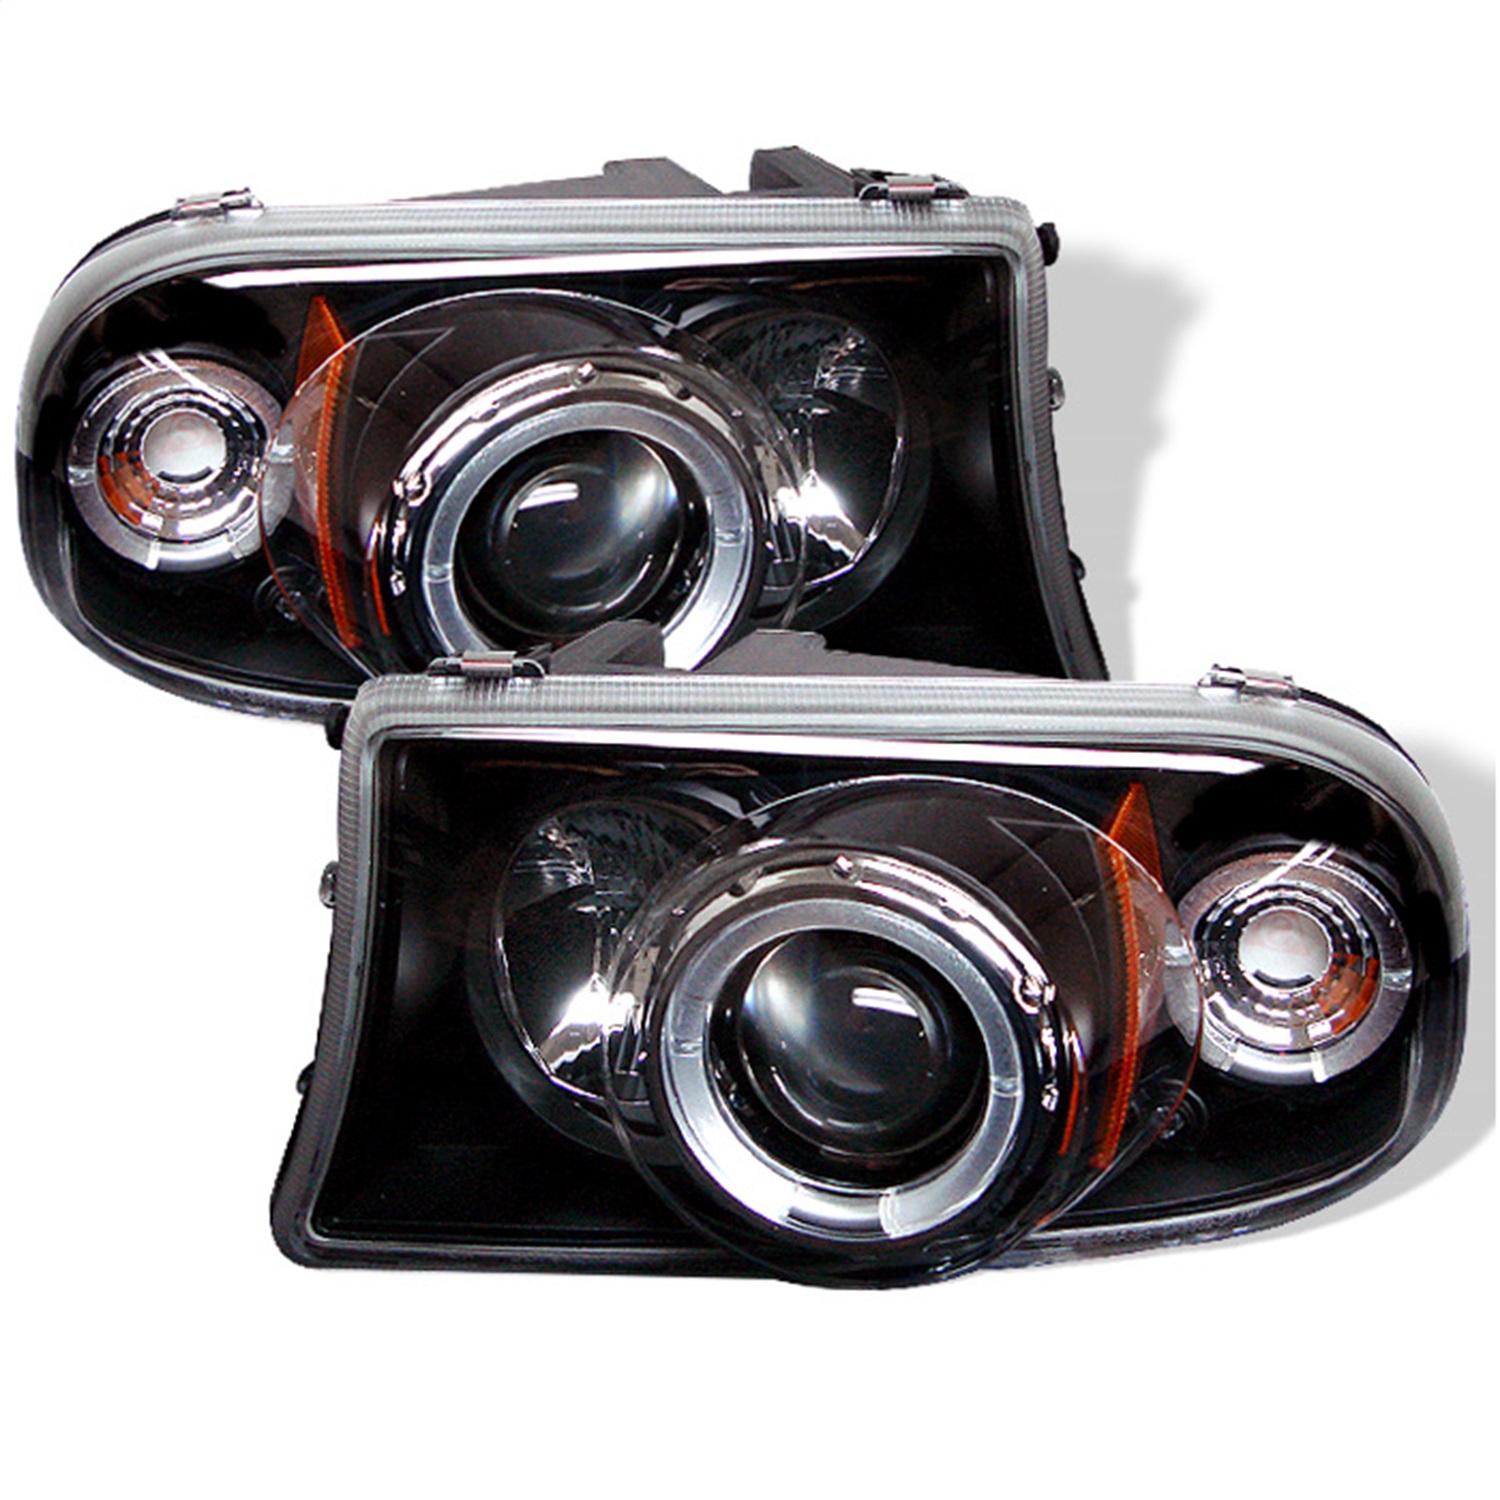 Spyder Auto 5009784 Halo Projector Headlights Fits 97-04 Dakota Durango